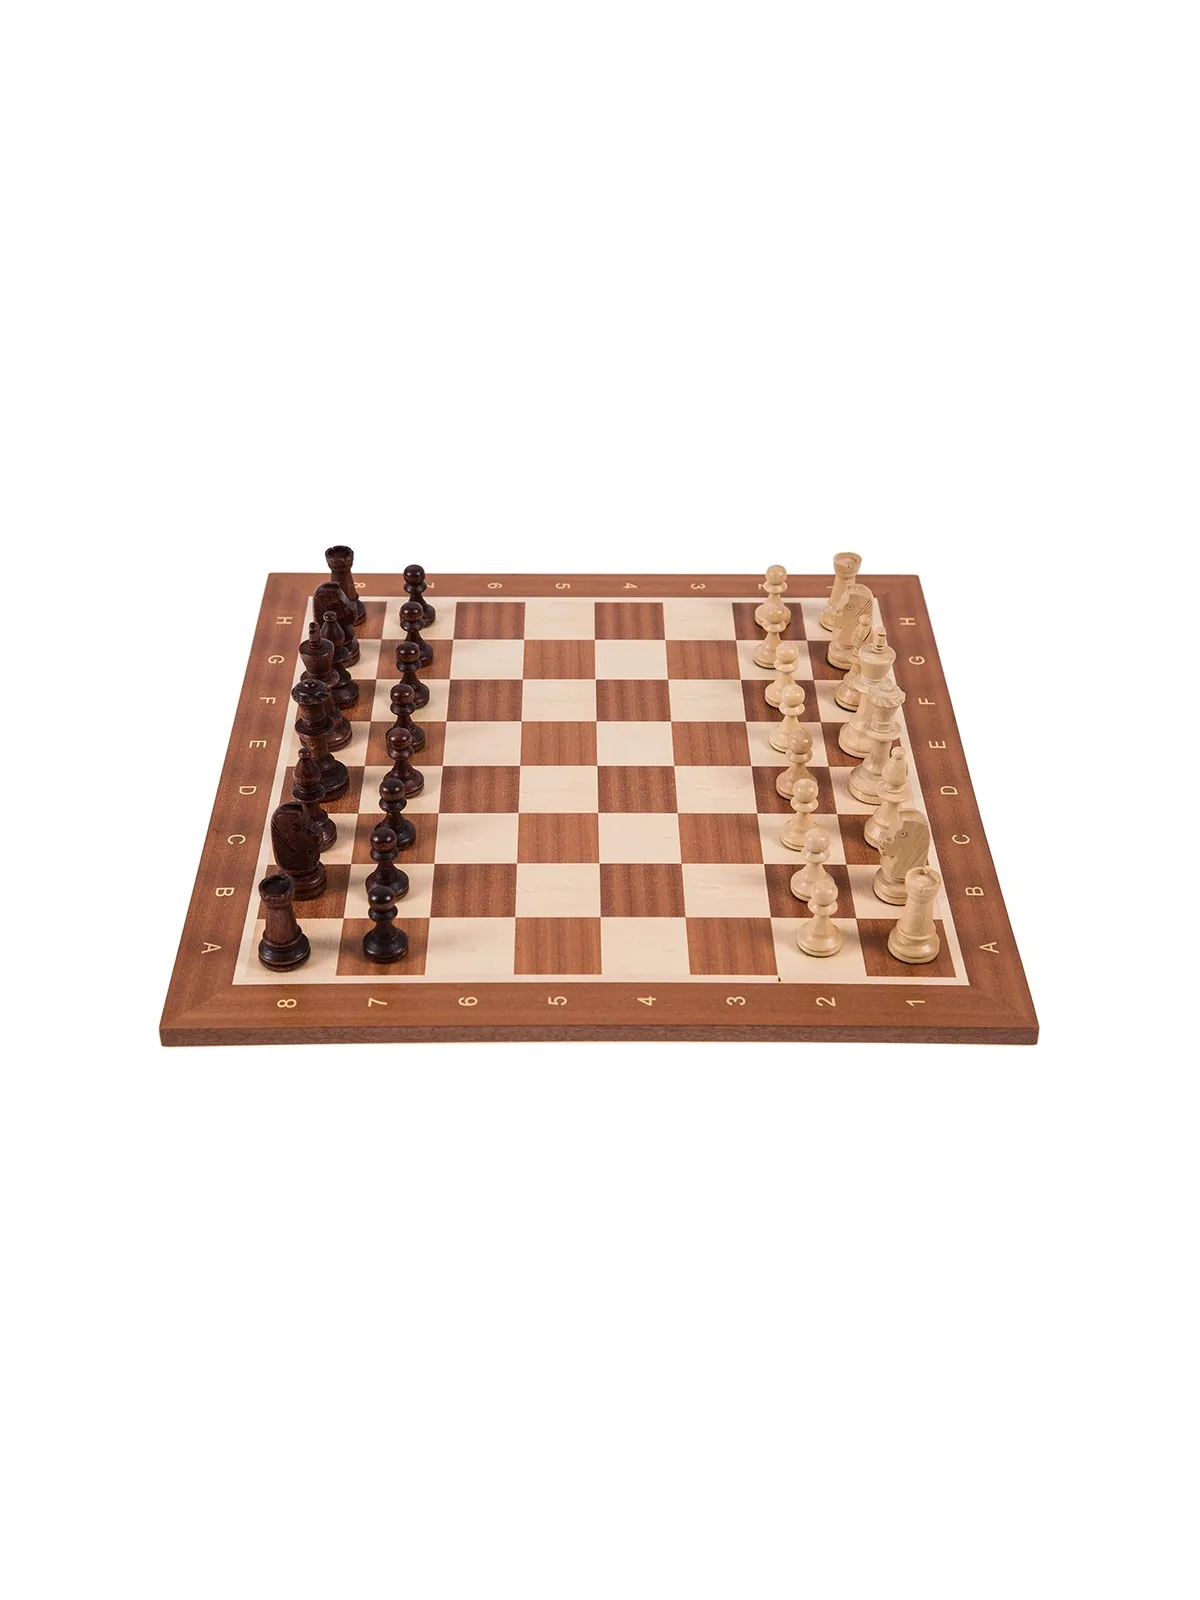 Profi Chess Set No 5 - Europe